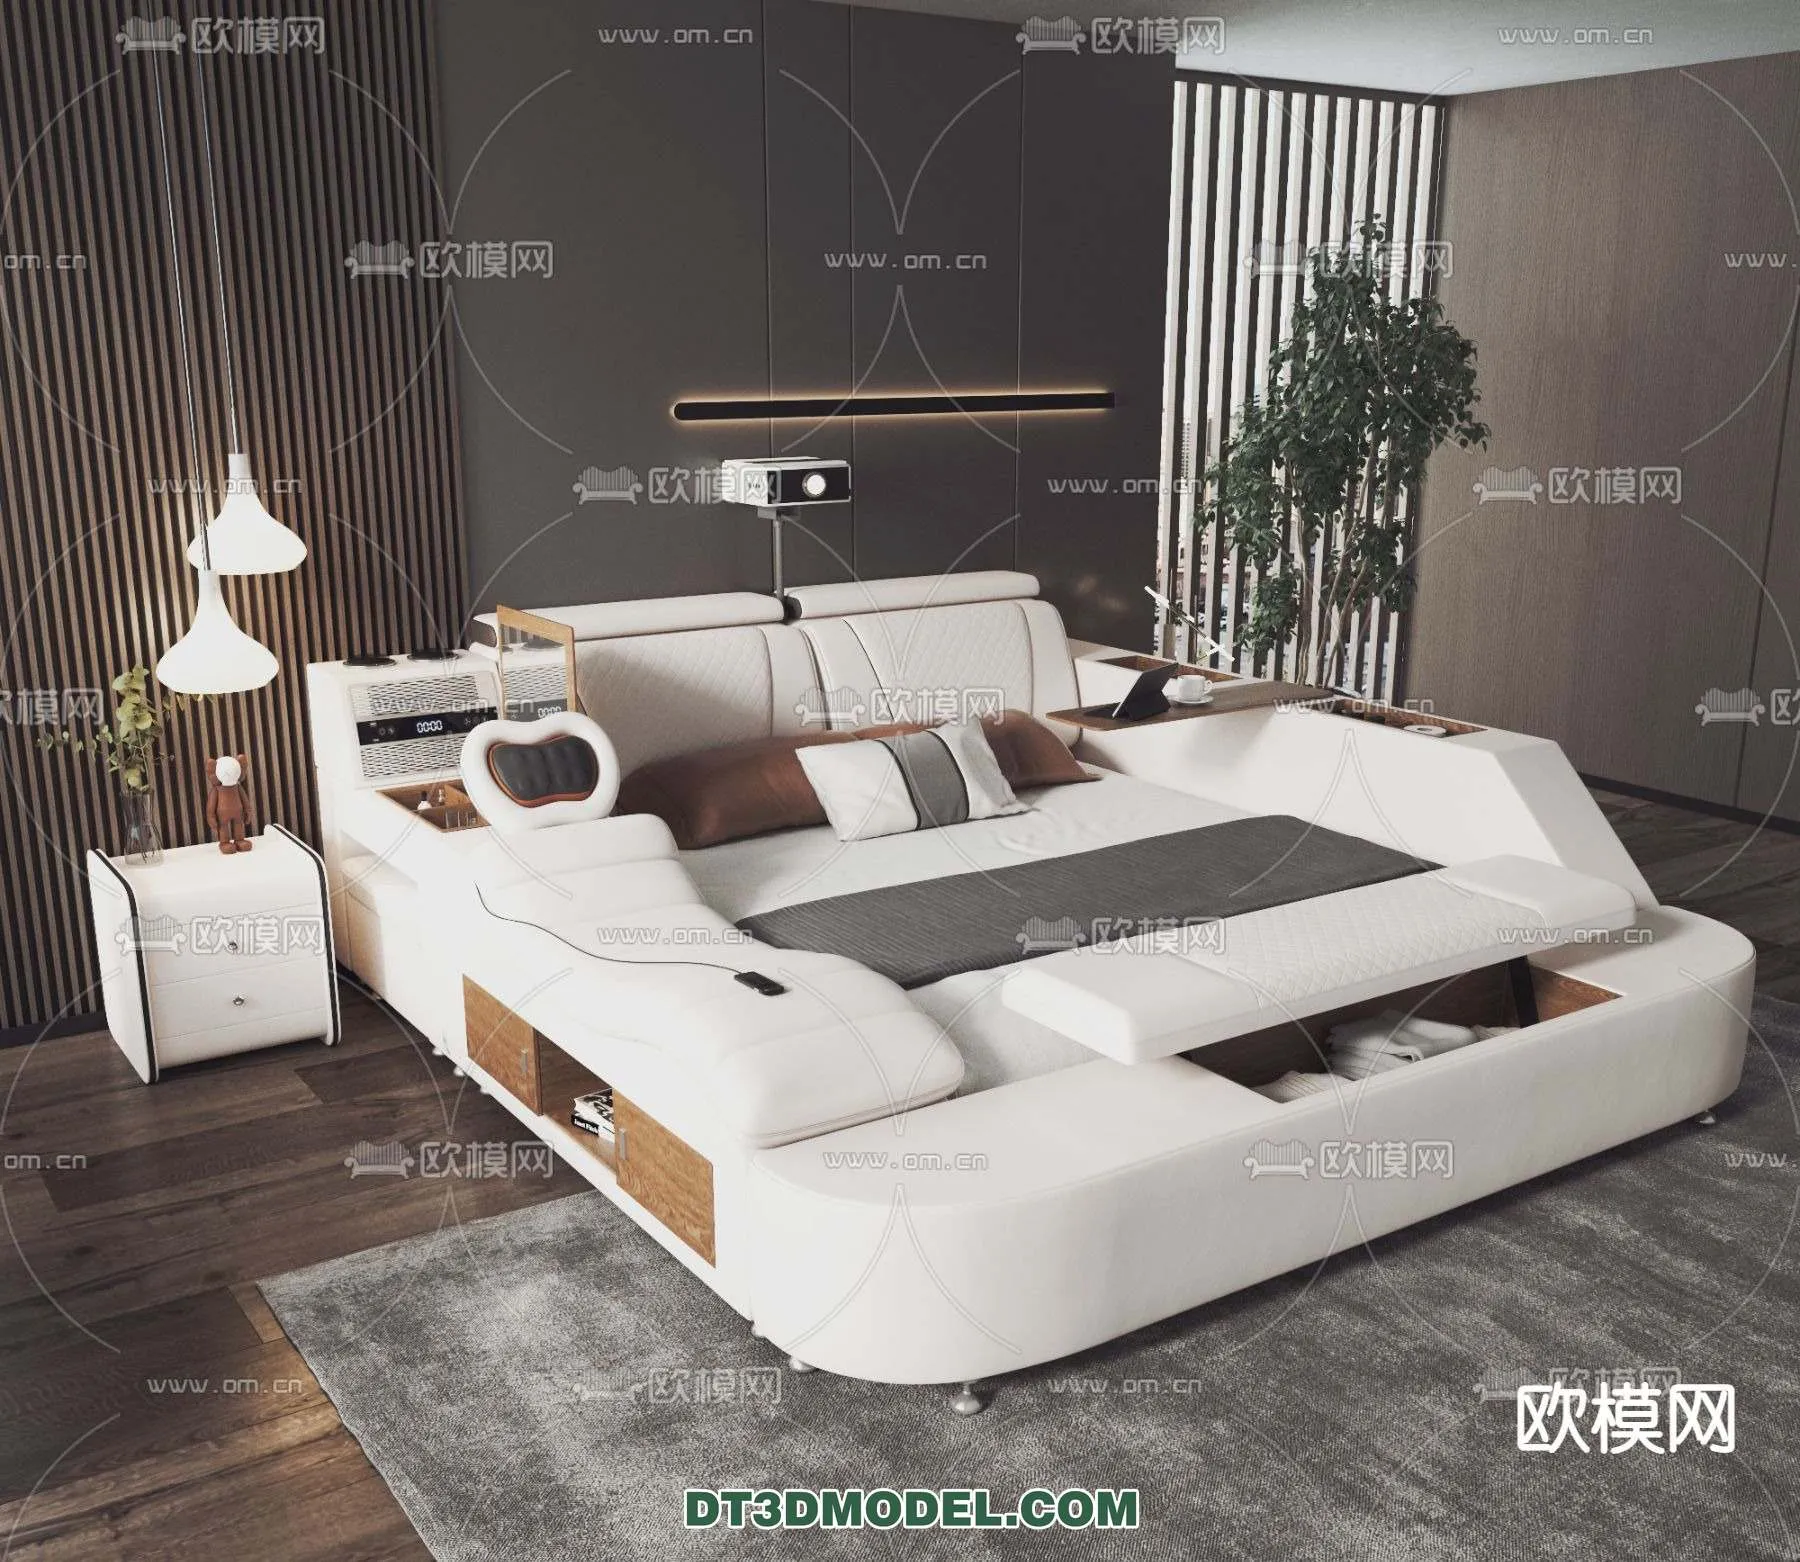 Double Bed 3D Models – 0033